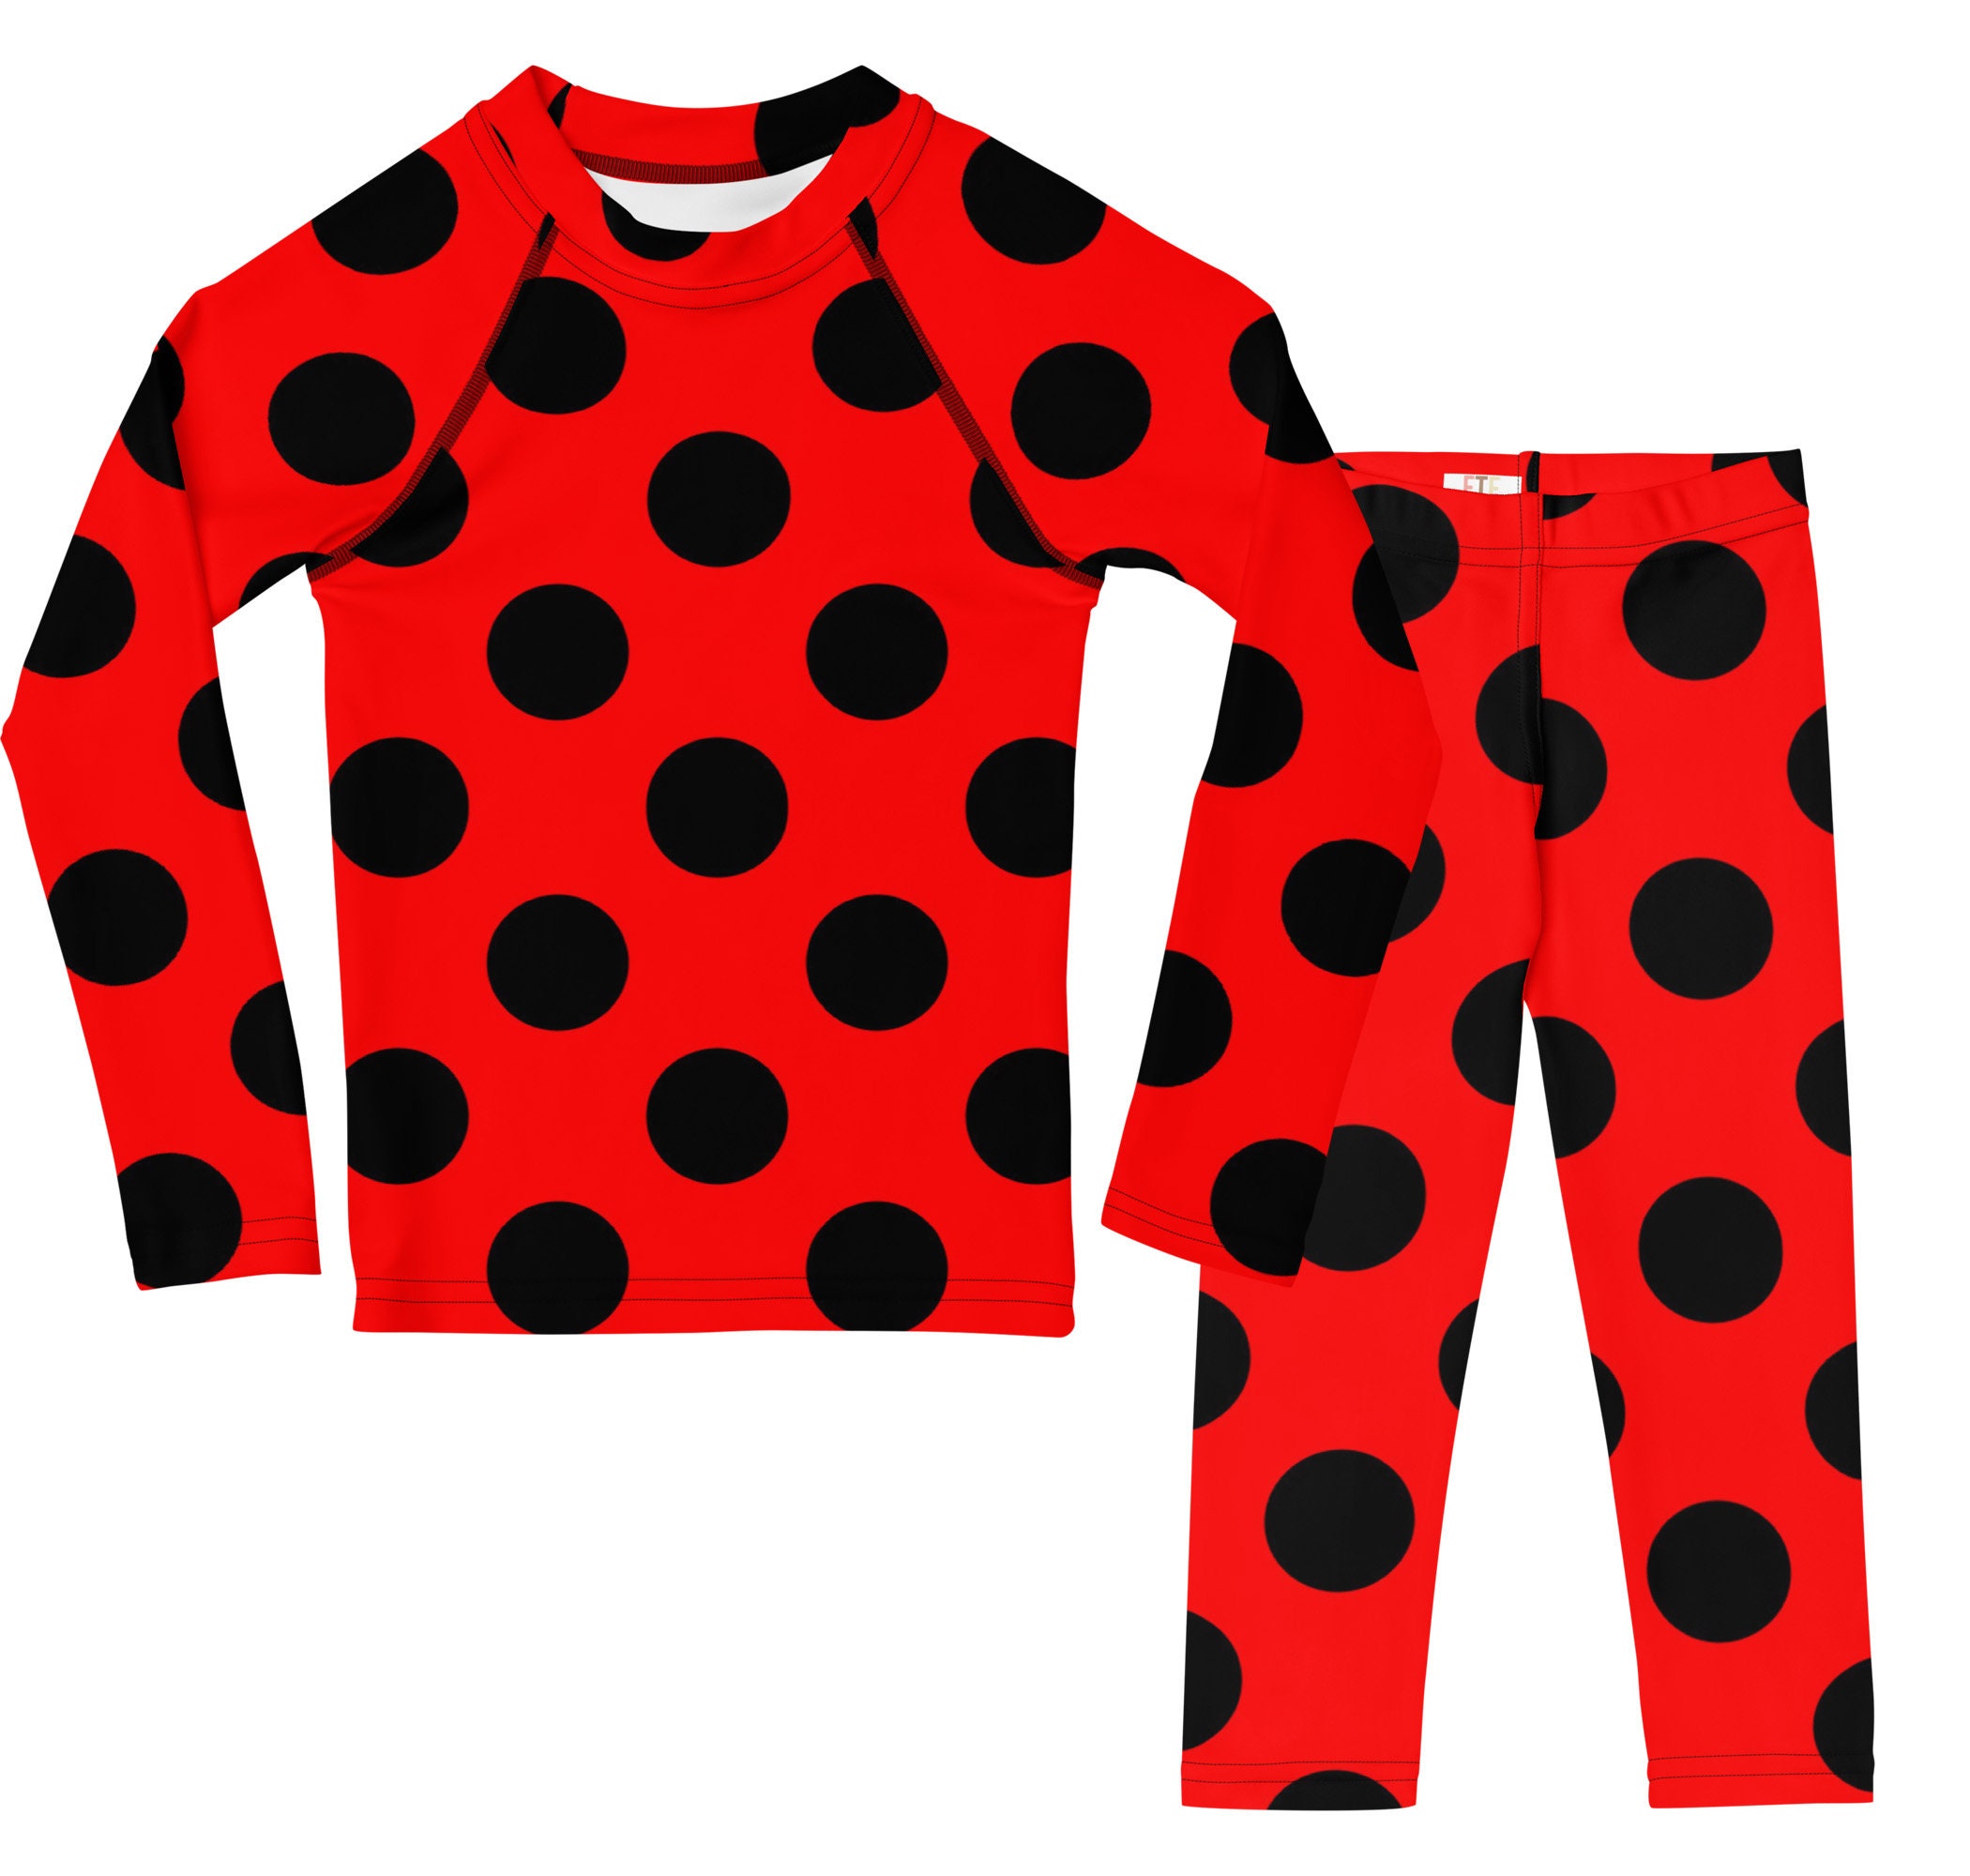 Miraculous Ladybug Rena Rogue Girls Halloween Costume Kids Size Small Size  4-6